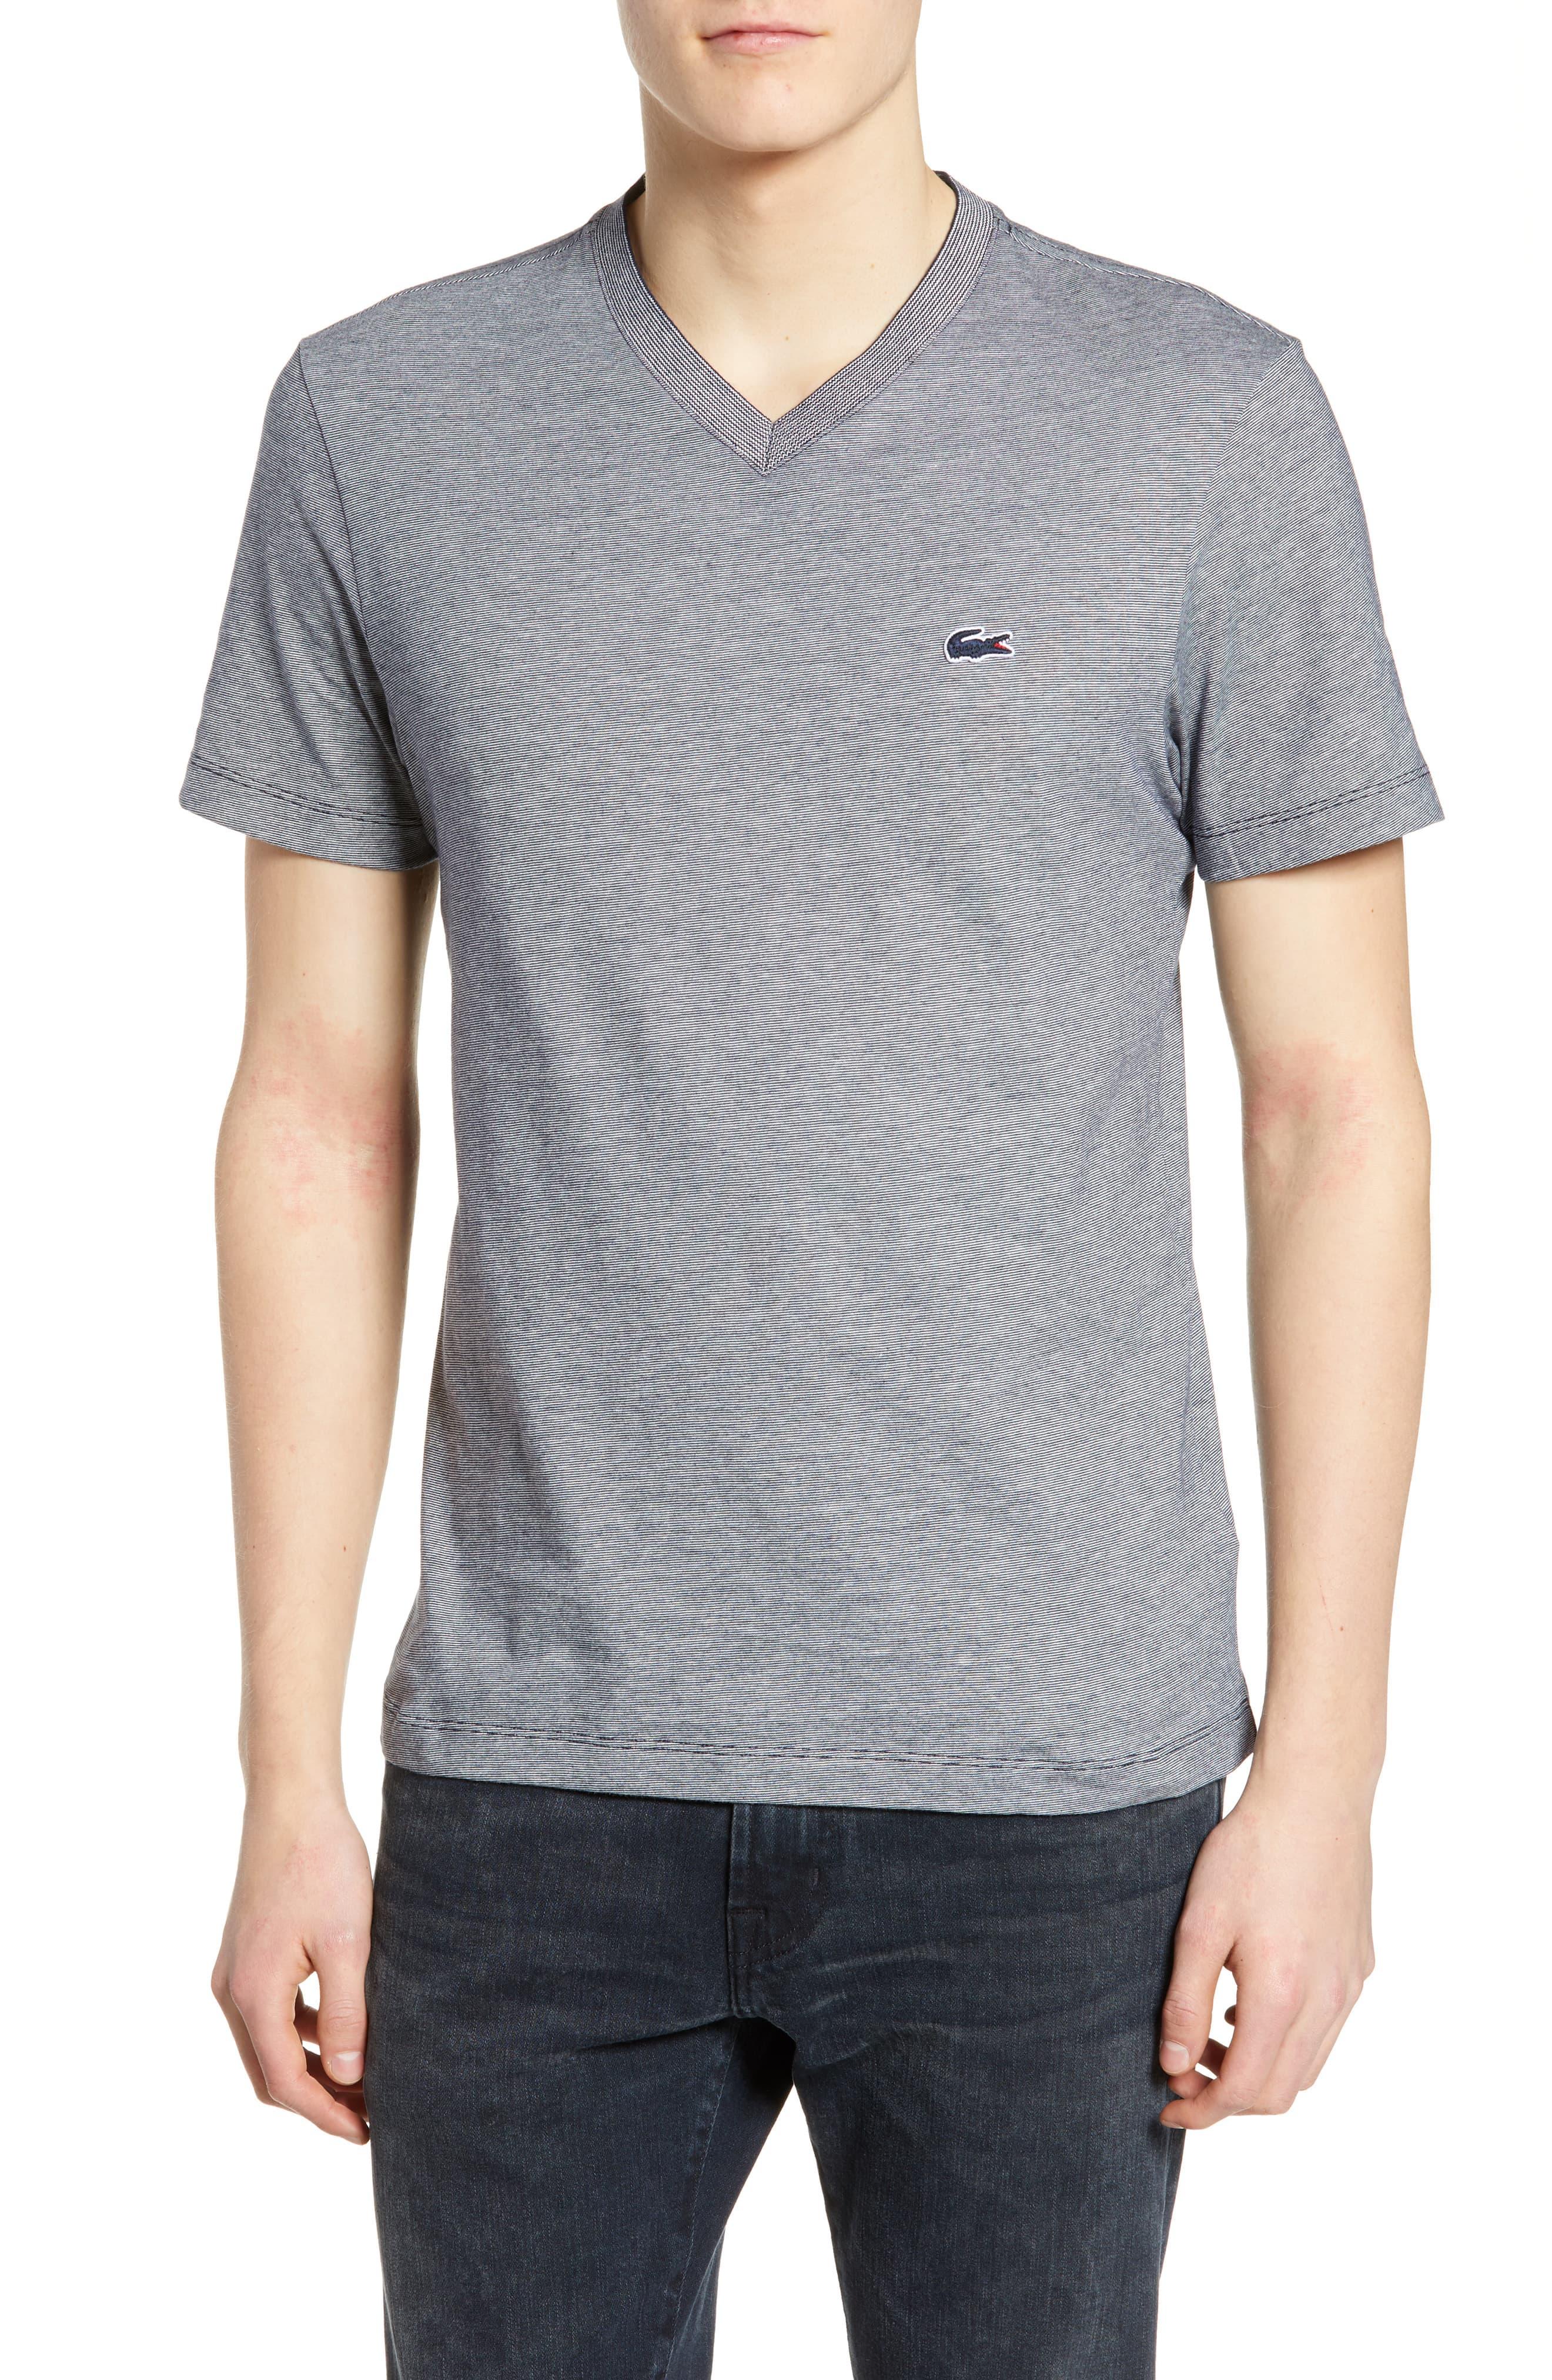 Lacoste Regular Fit V-neck T-shirt in Gray for Men - Lyst